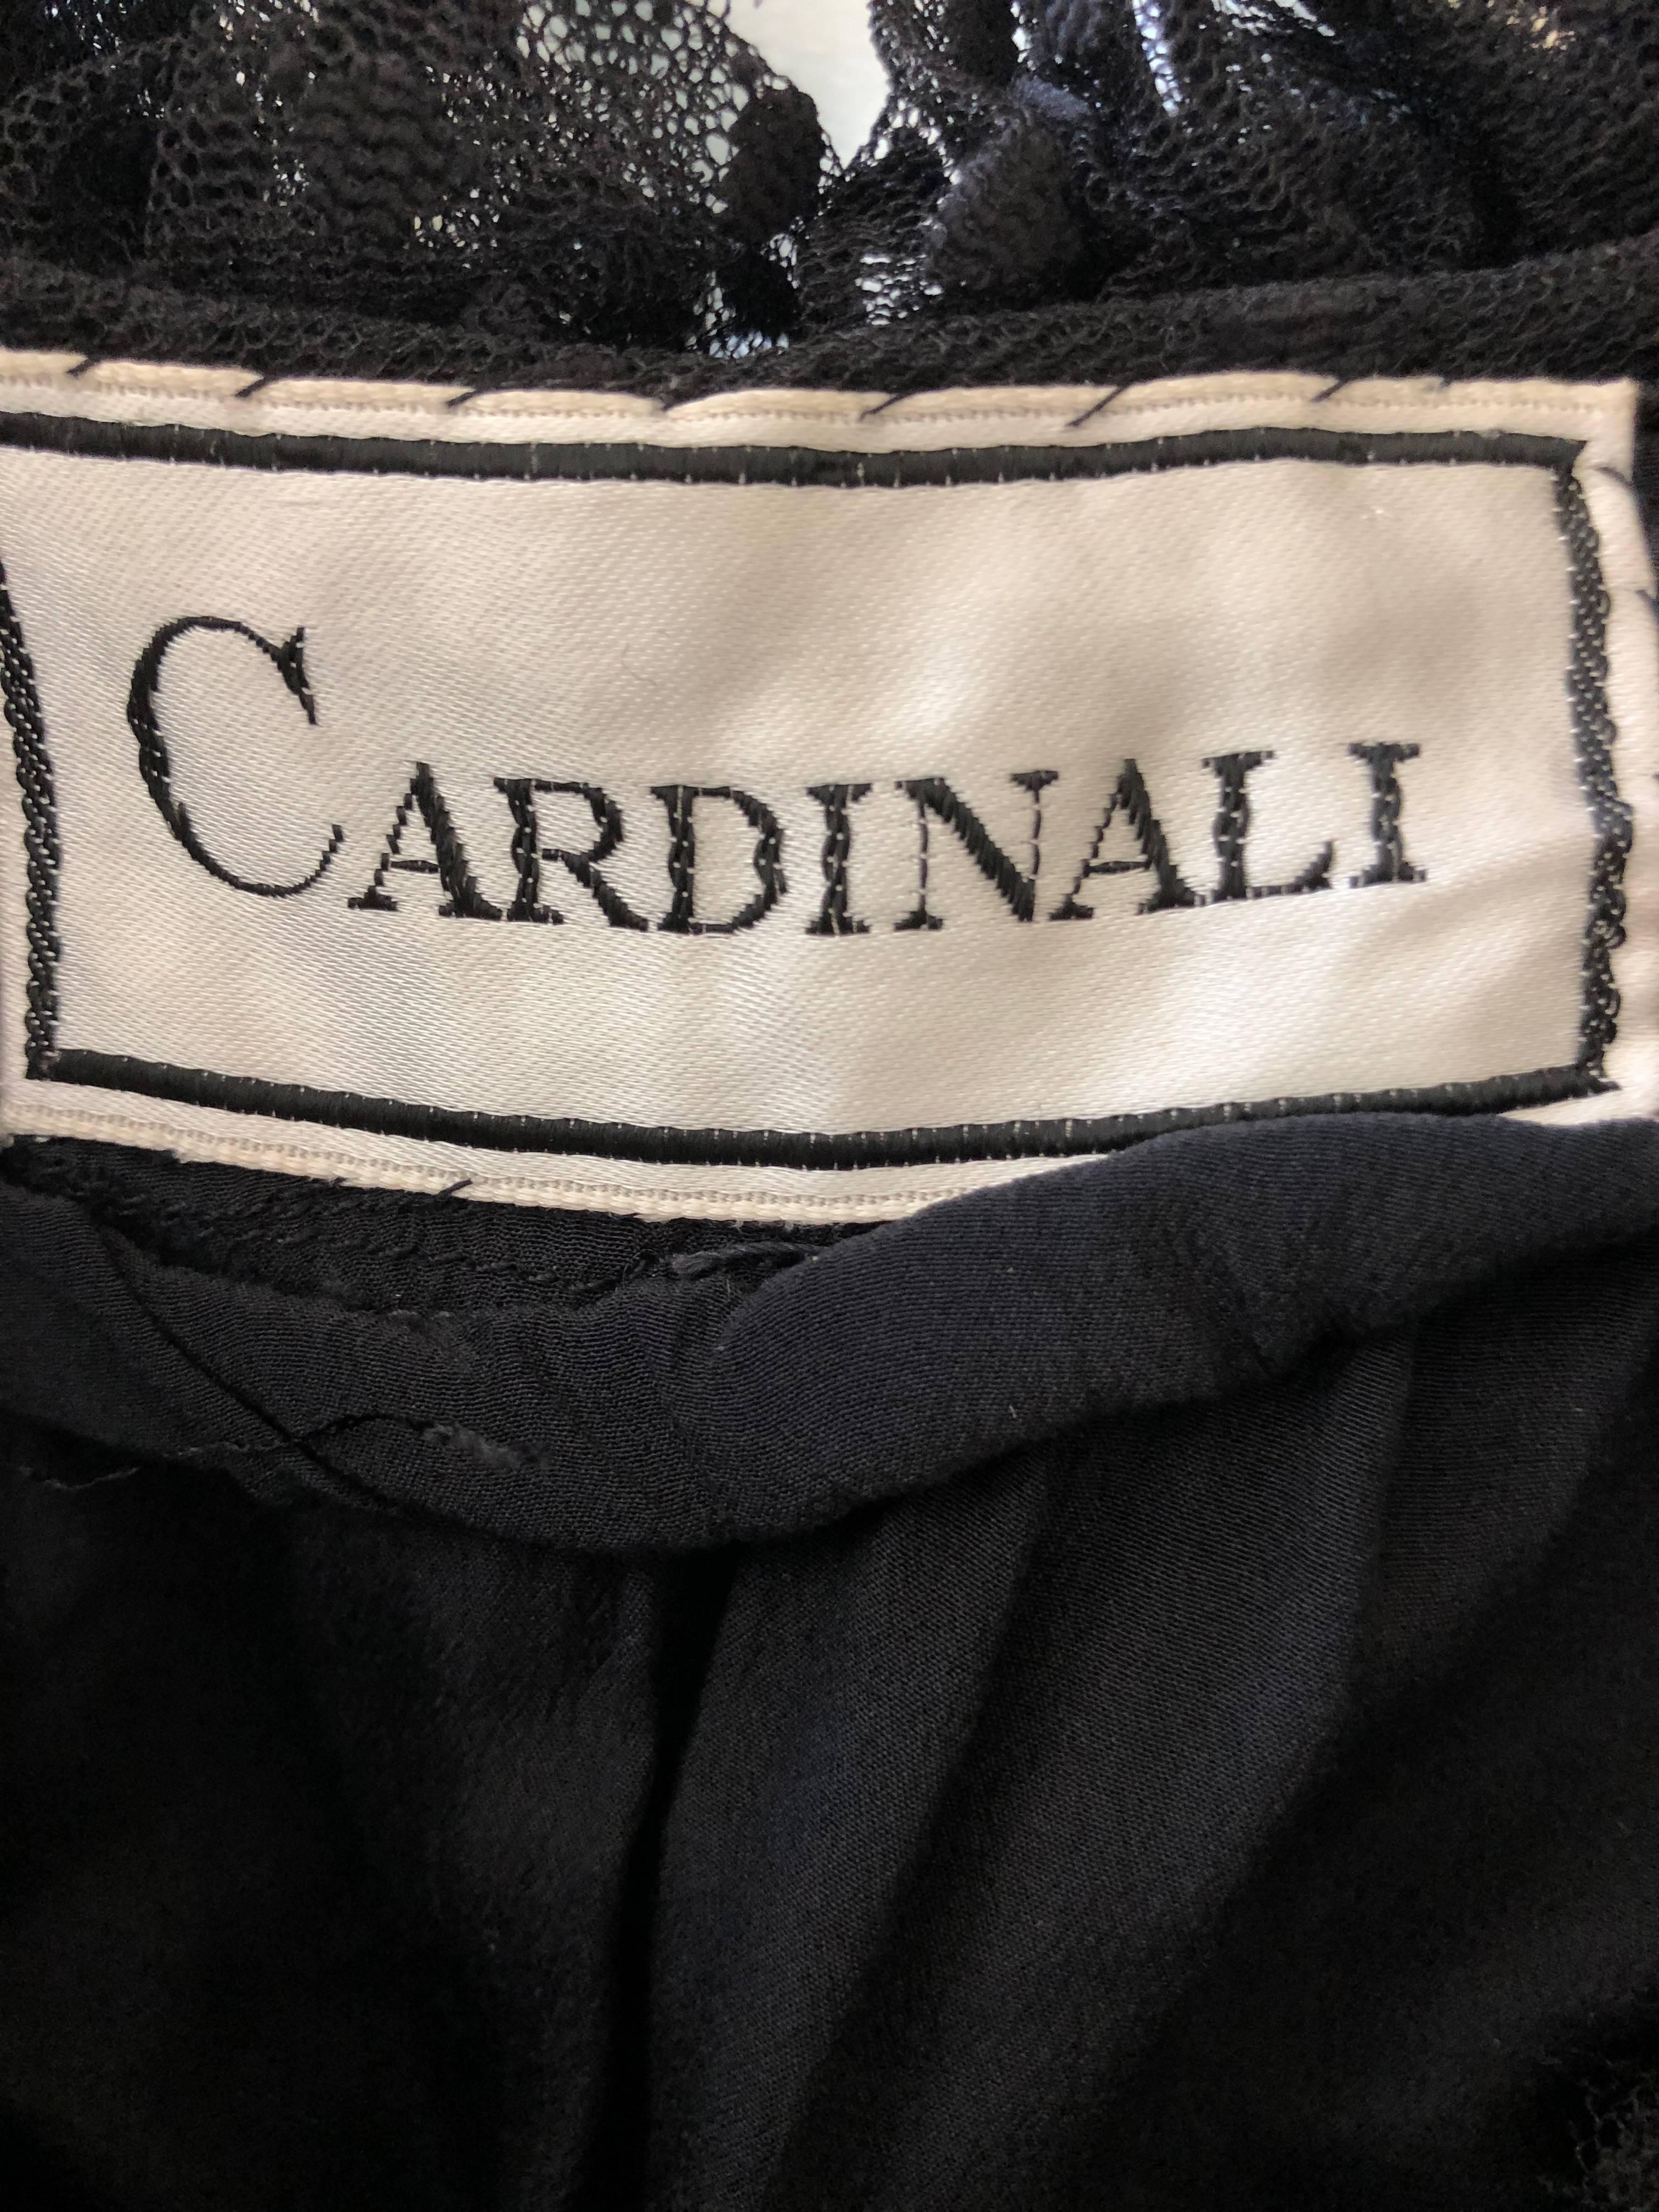 Cardinali Dramatic Black Ruffled Poet Sleeve Silk Cocktail Dress 8